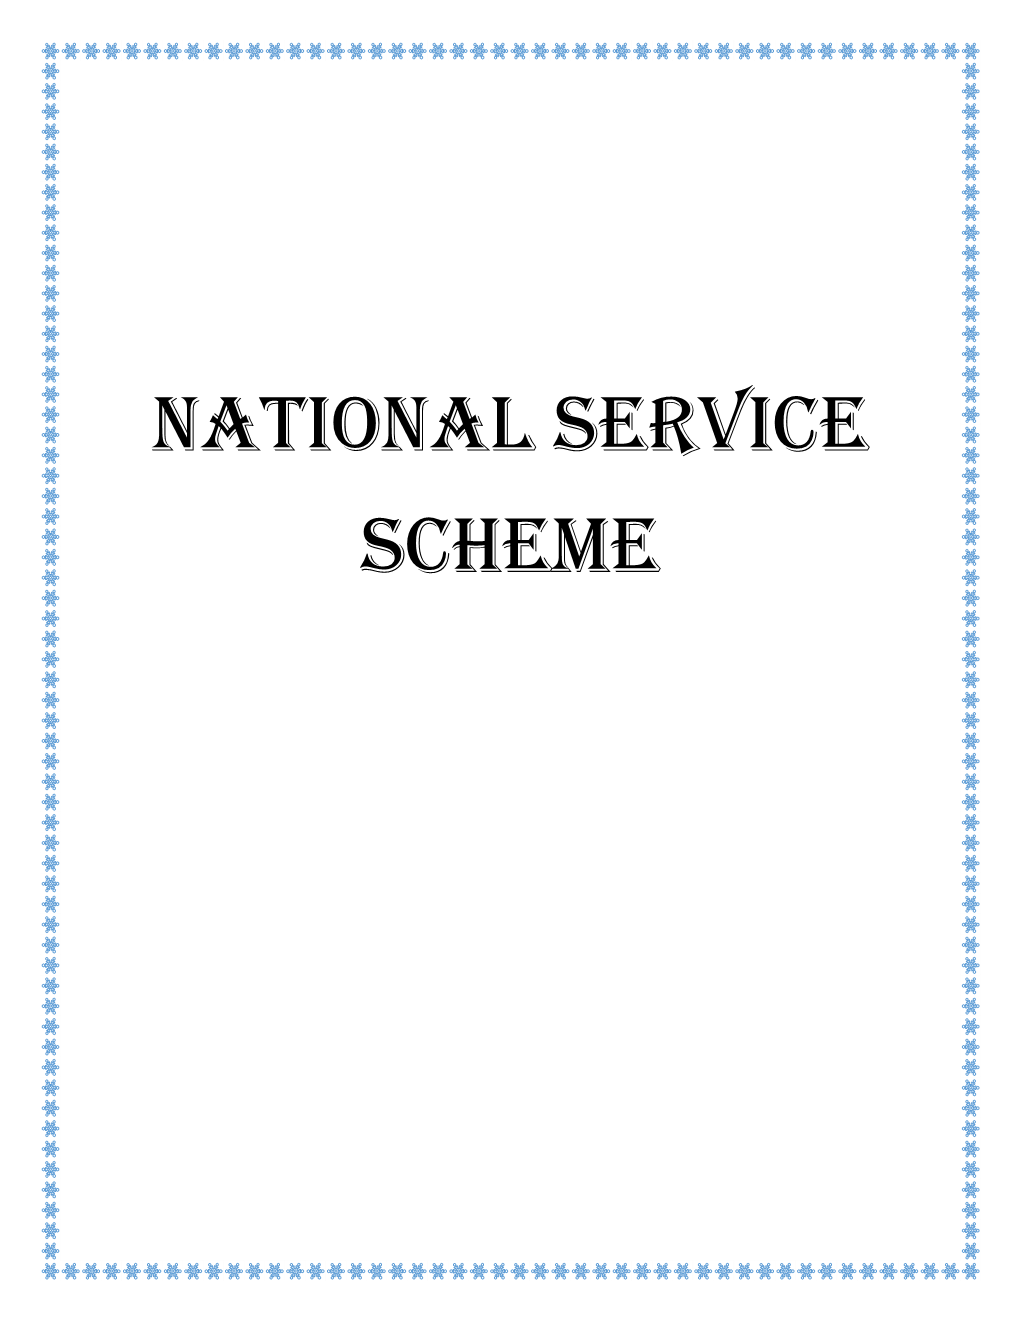 National Service Scheme Annual Report